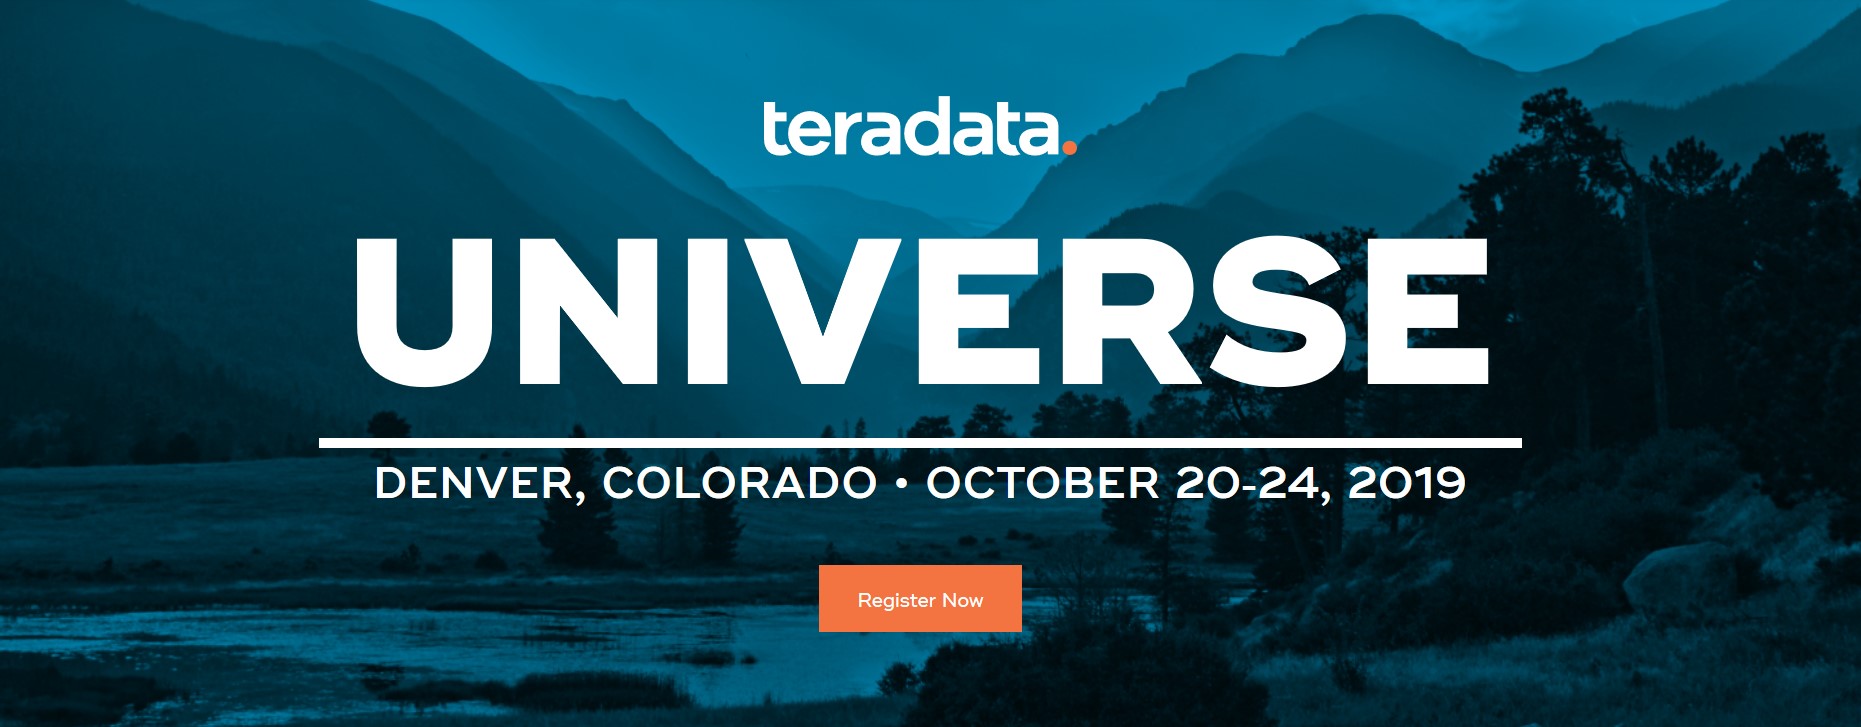 Teradata Universe, Denver, CO Constellation Research Inc.